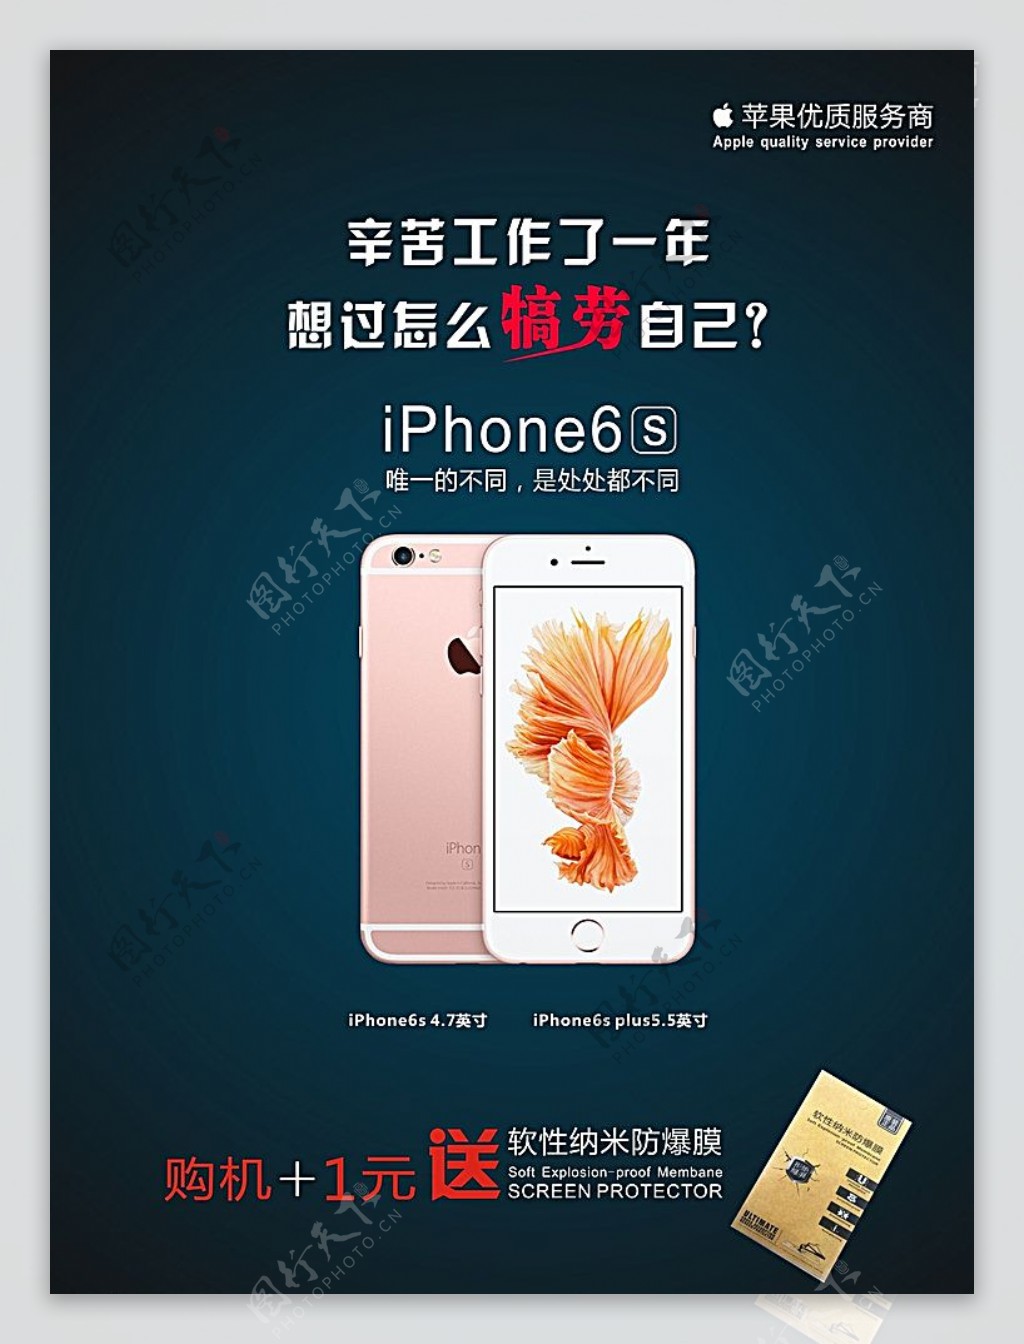 iPhone6s促销活动海报图片